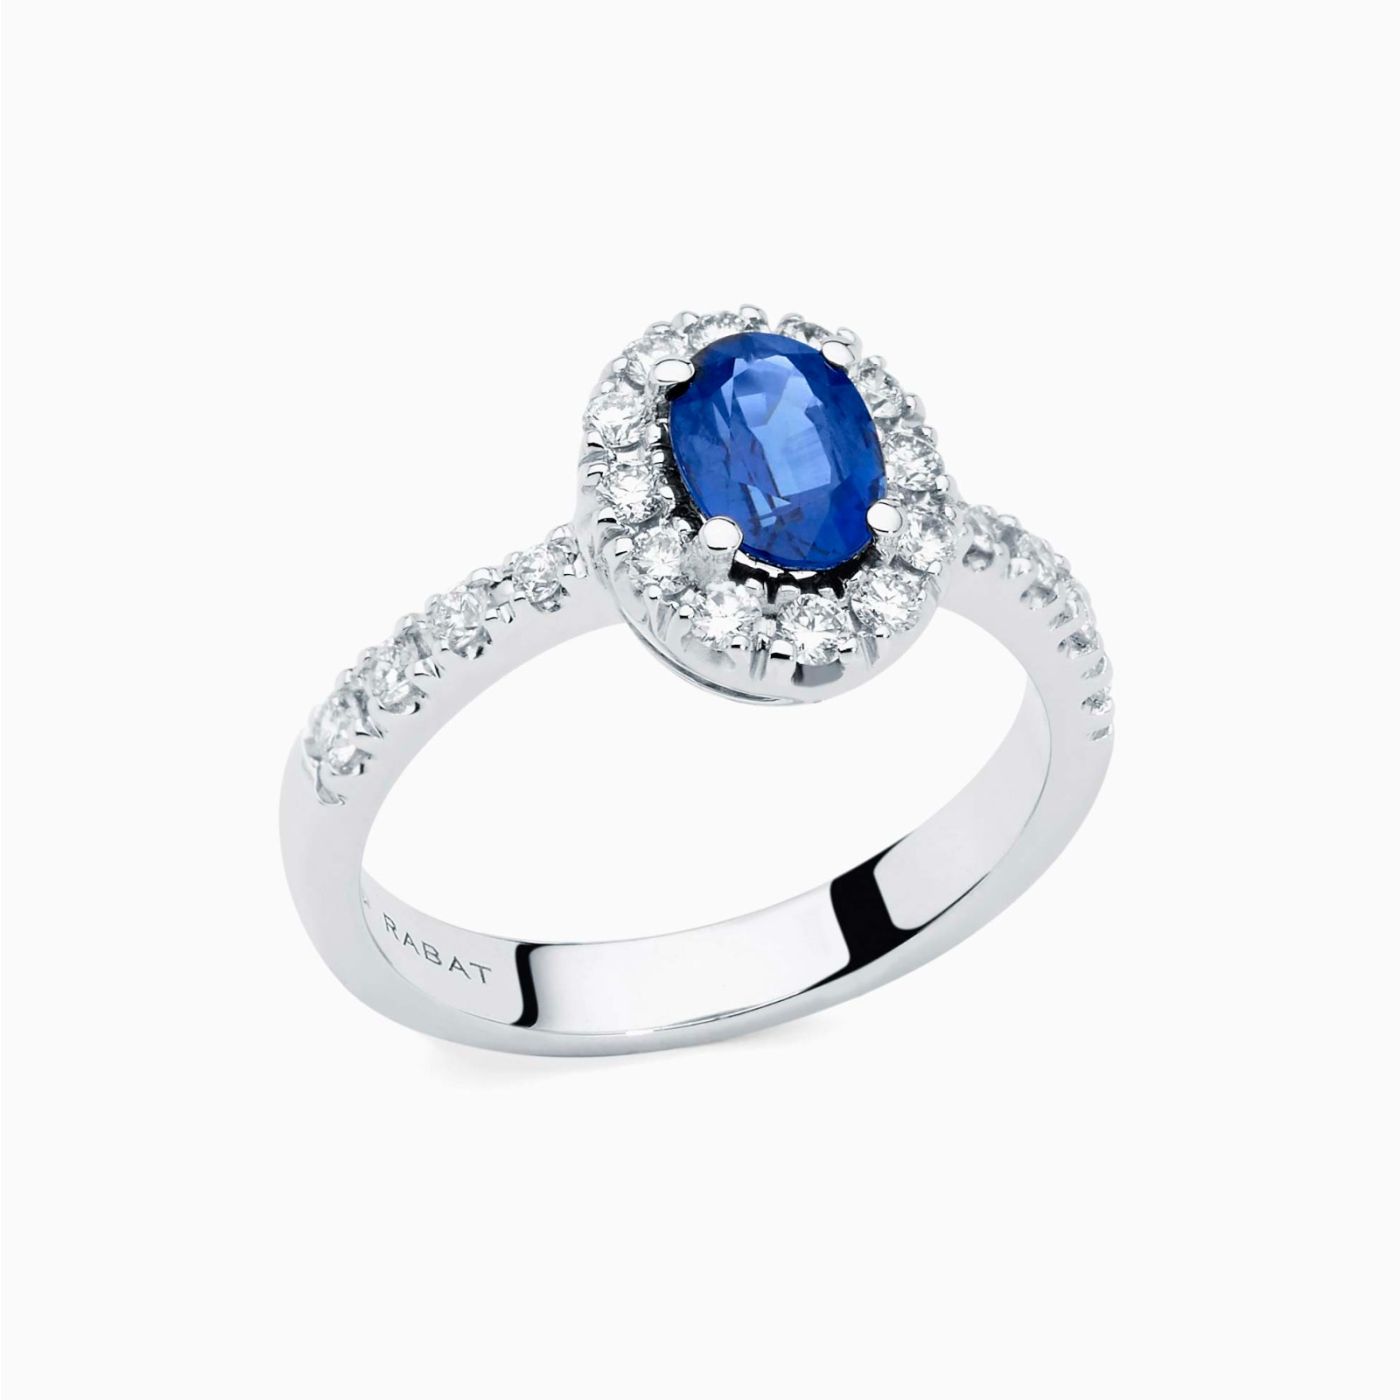 Saphire ring with diamonds